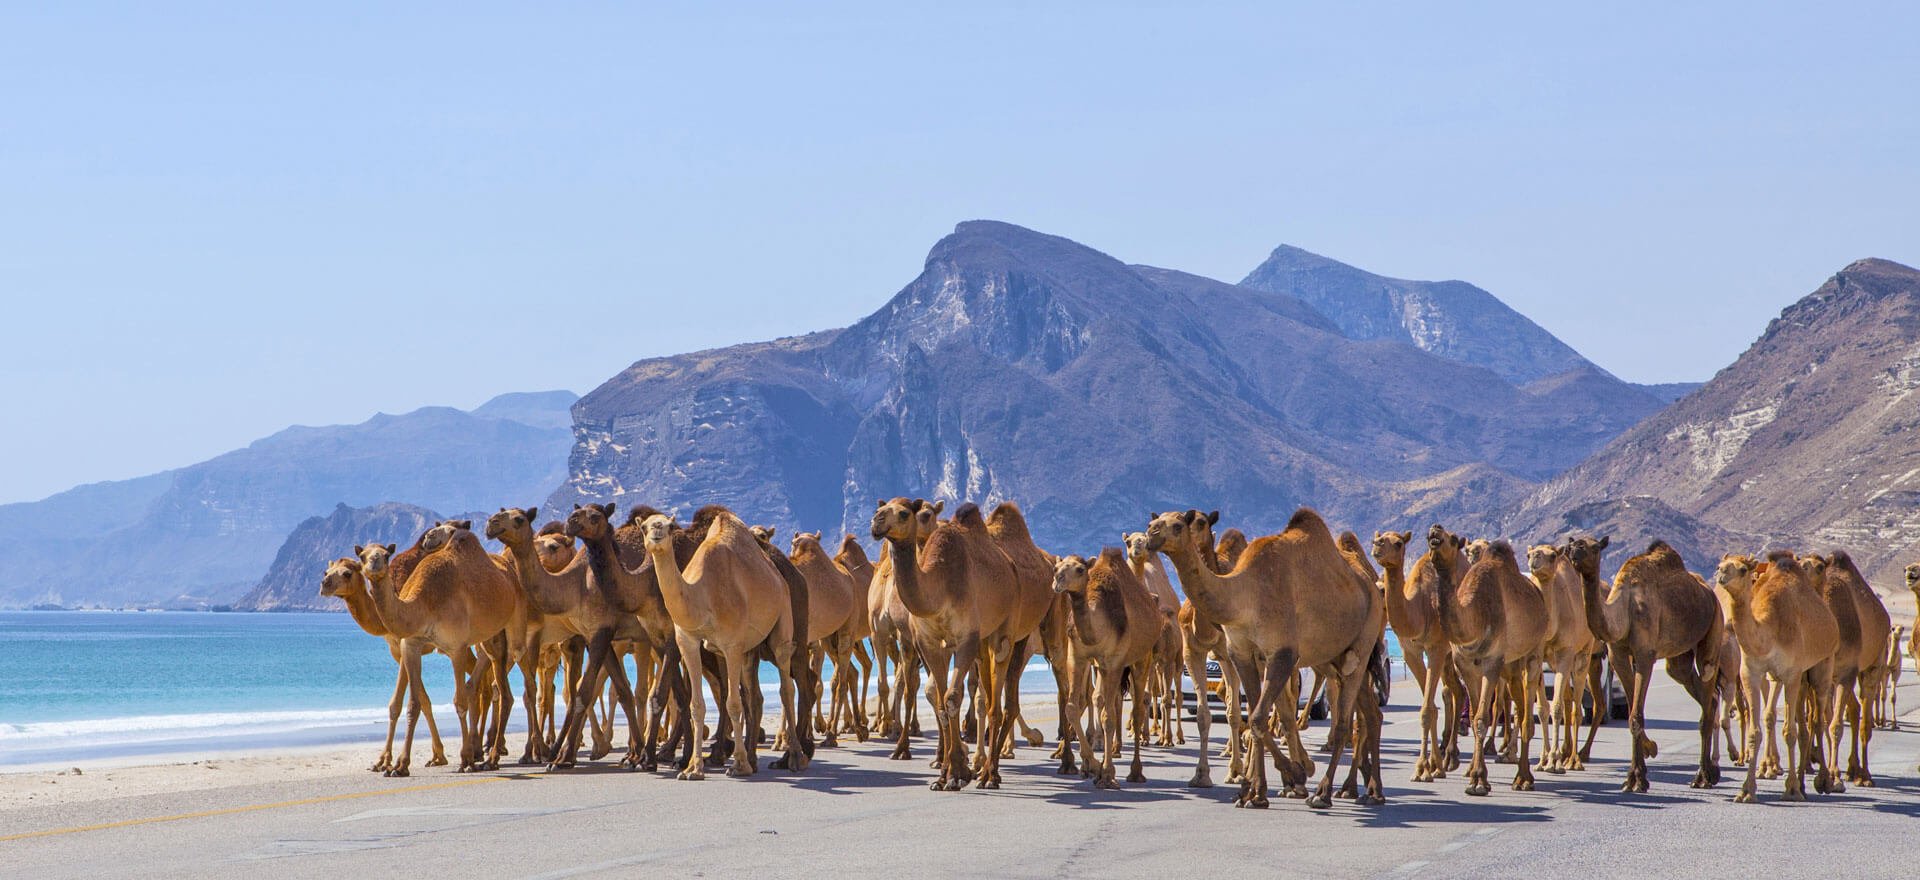 Oman holidays - camel train on beach